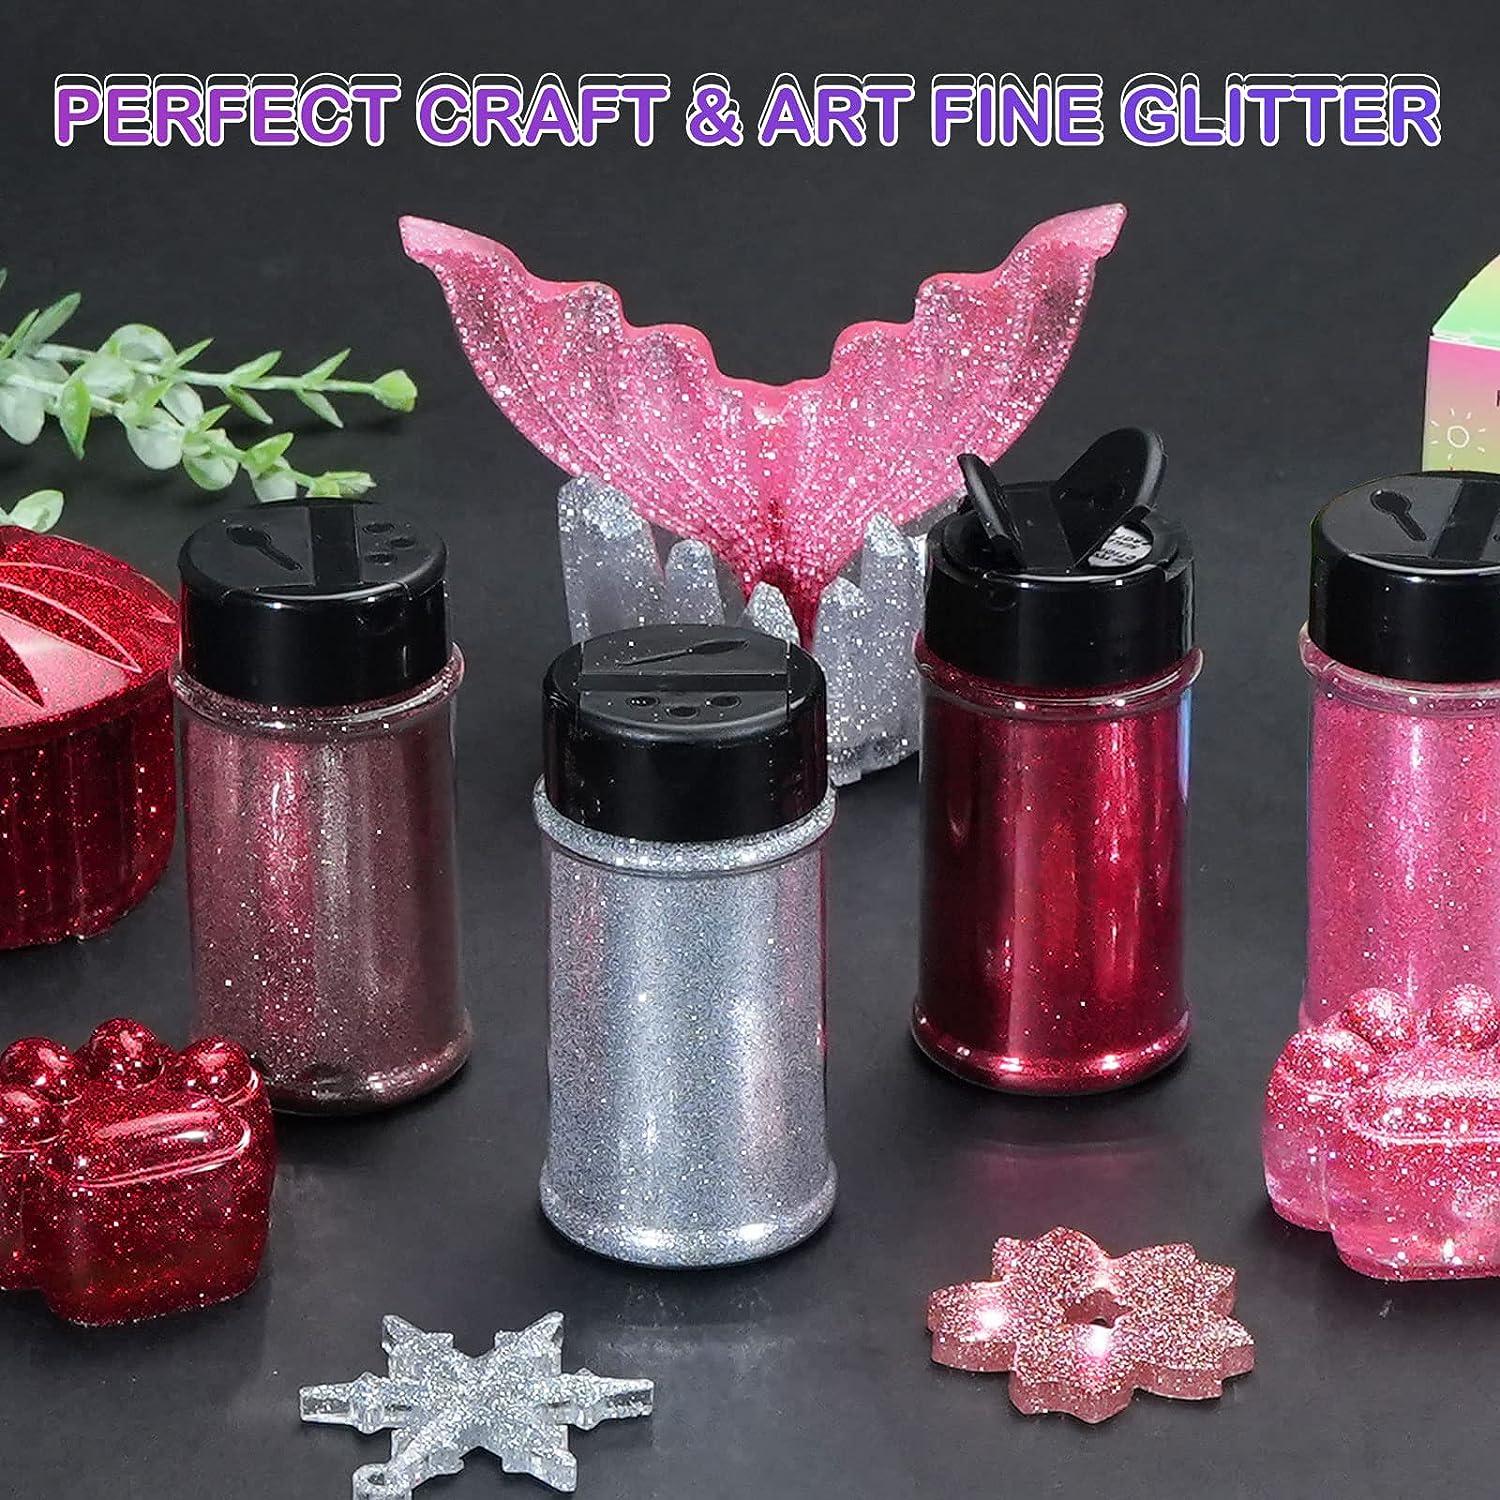 HTVRONT Silver Fine Glitter for Crafts - 50g/1.76oz Extra Fine